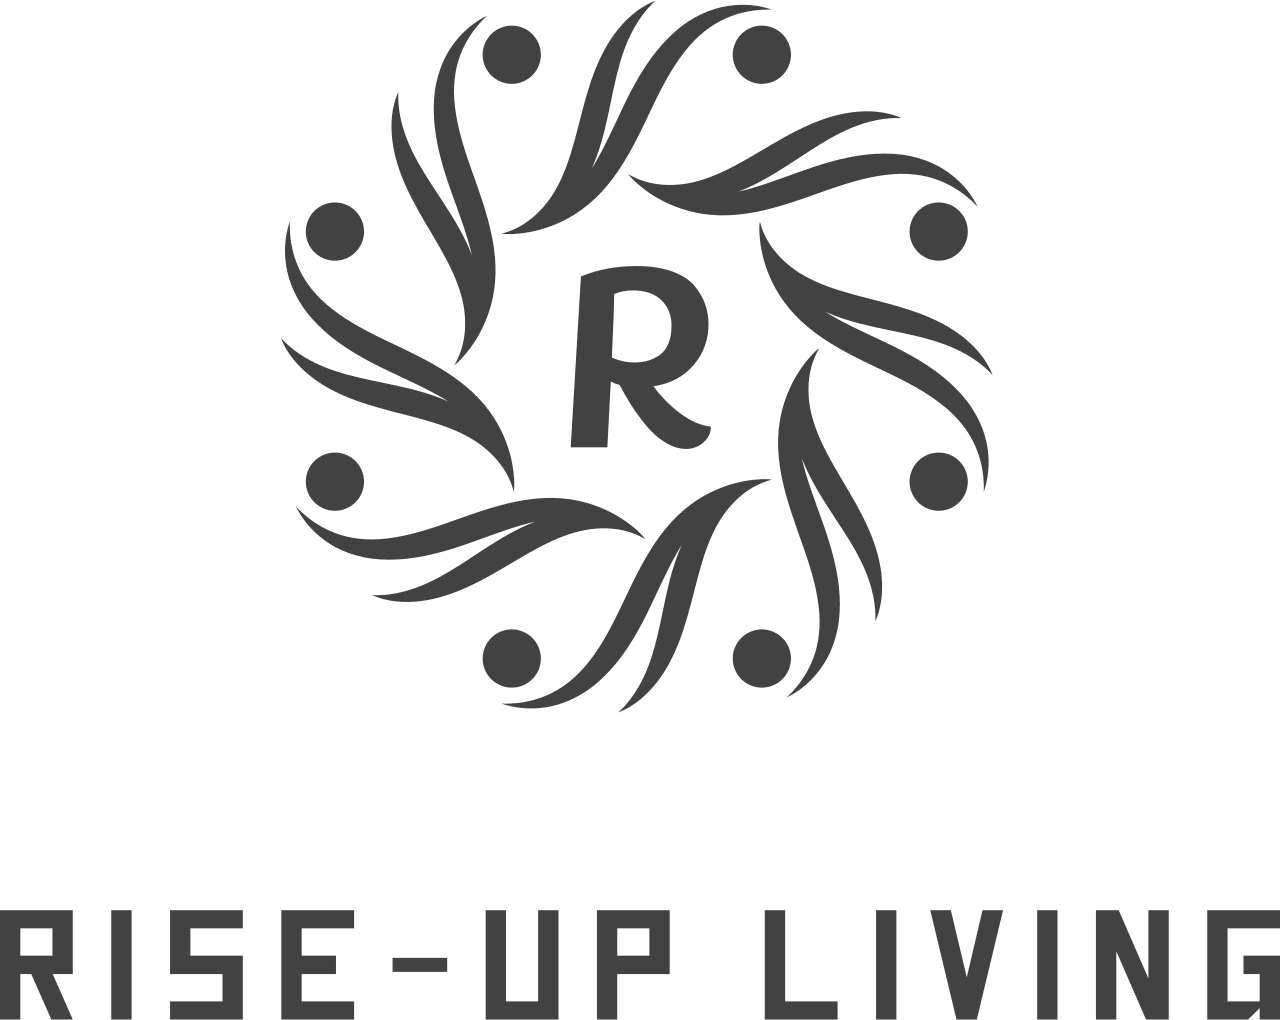 rise-up living's logo